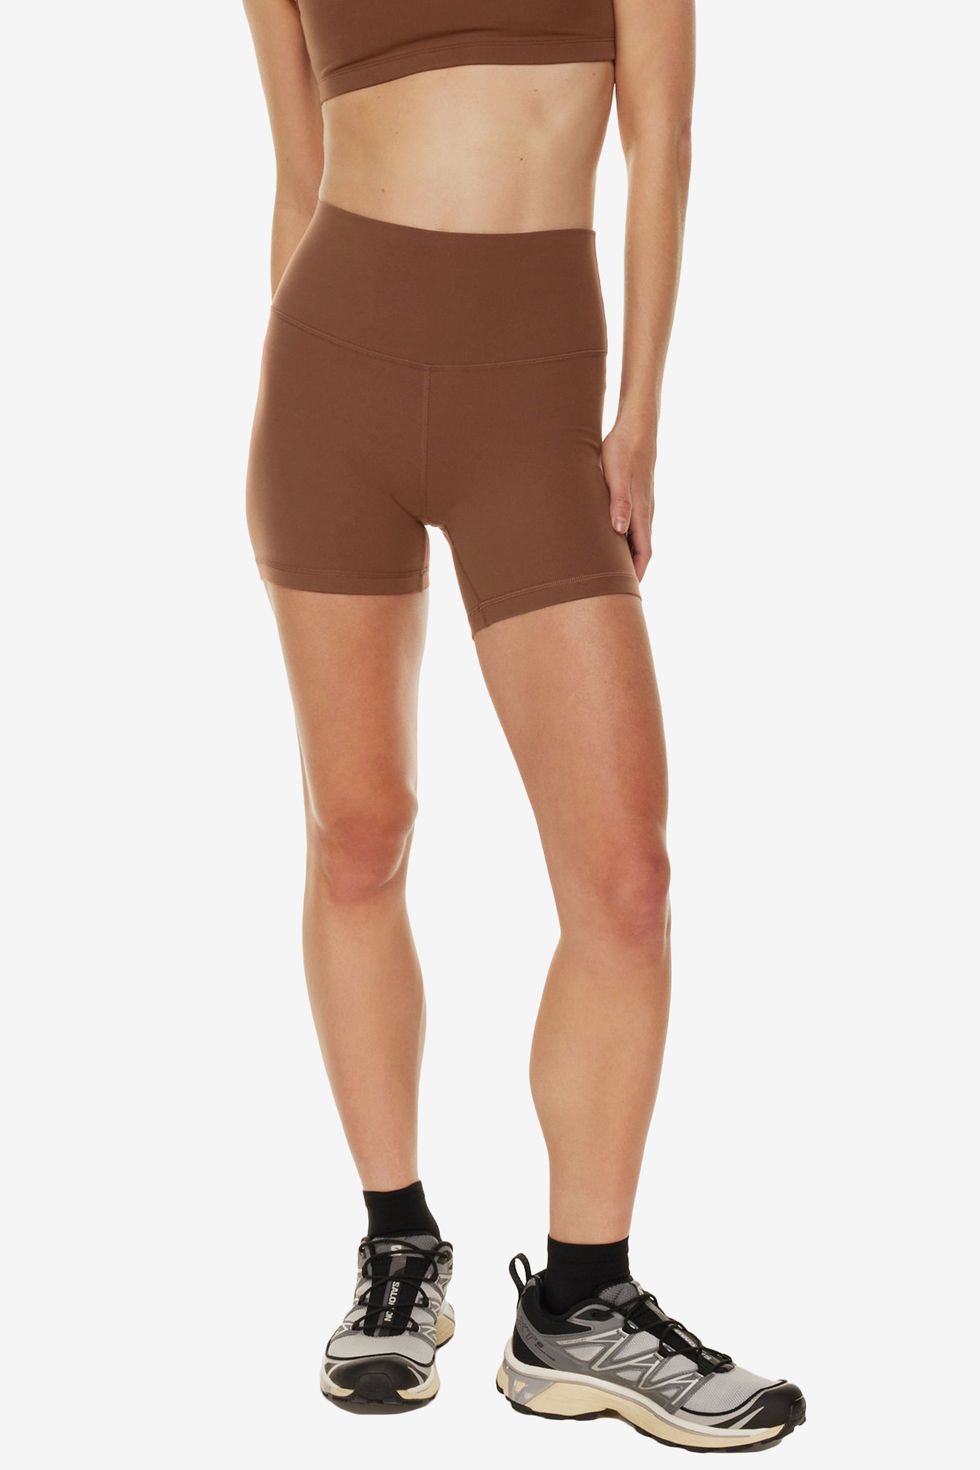 Yoga Short Pants 5” Biker Shorts Yoga Shorts for Women High Waist